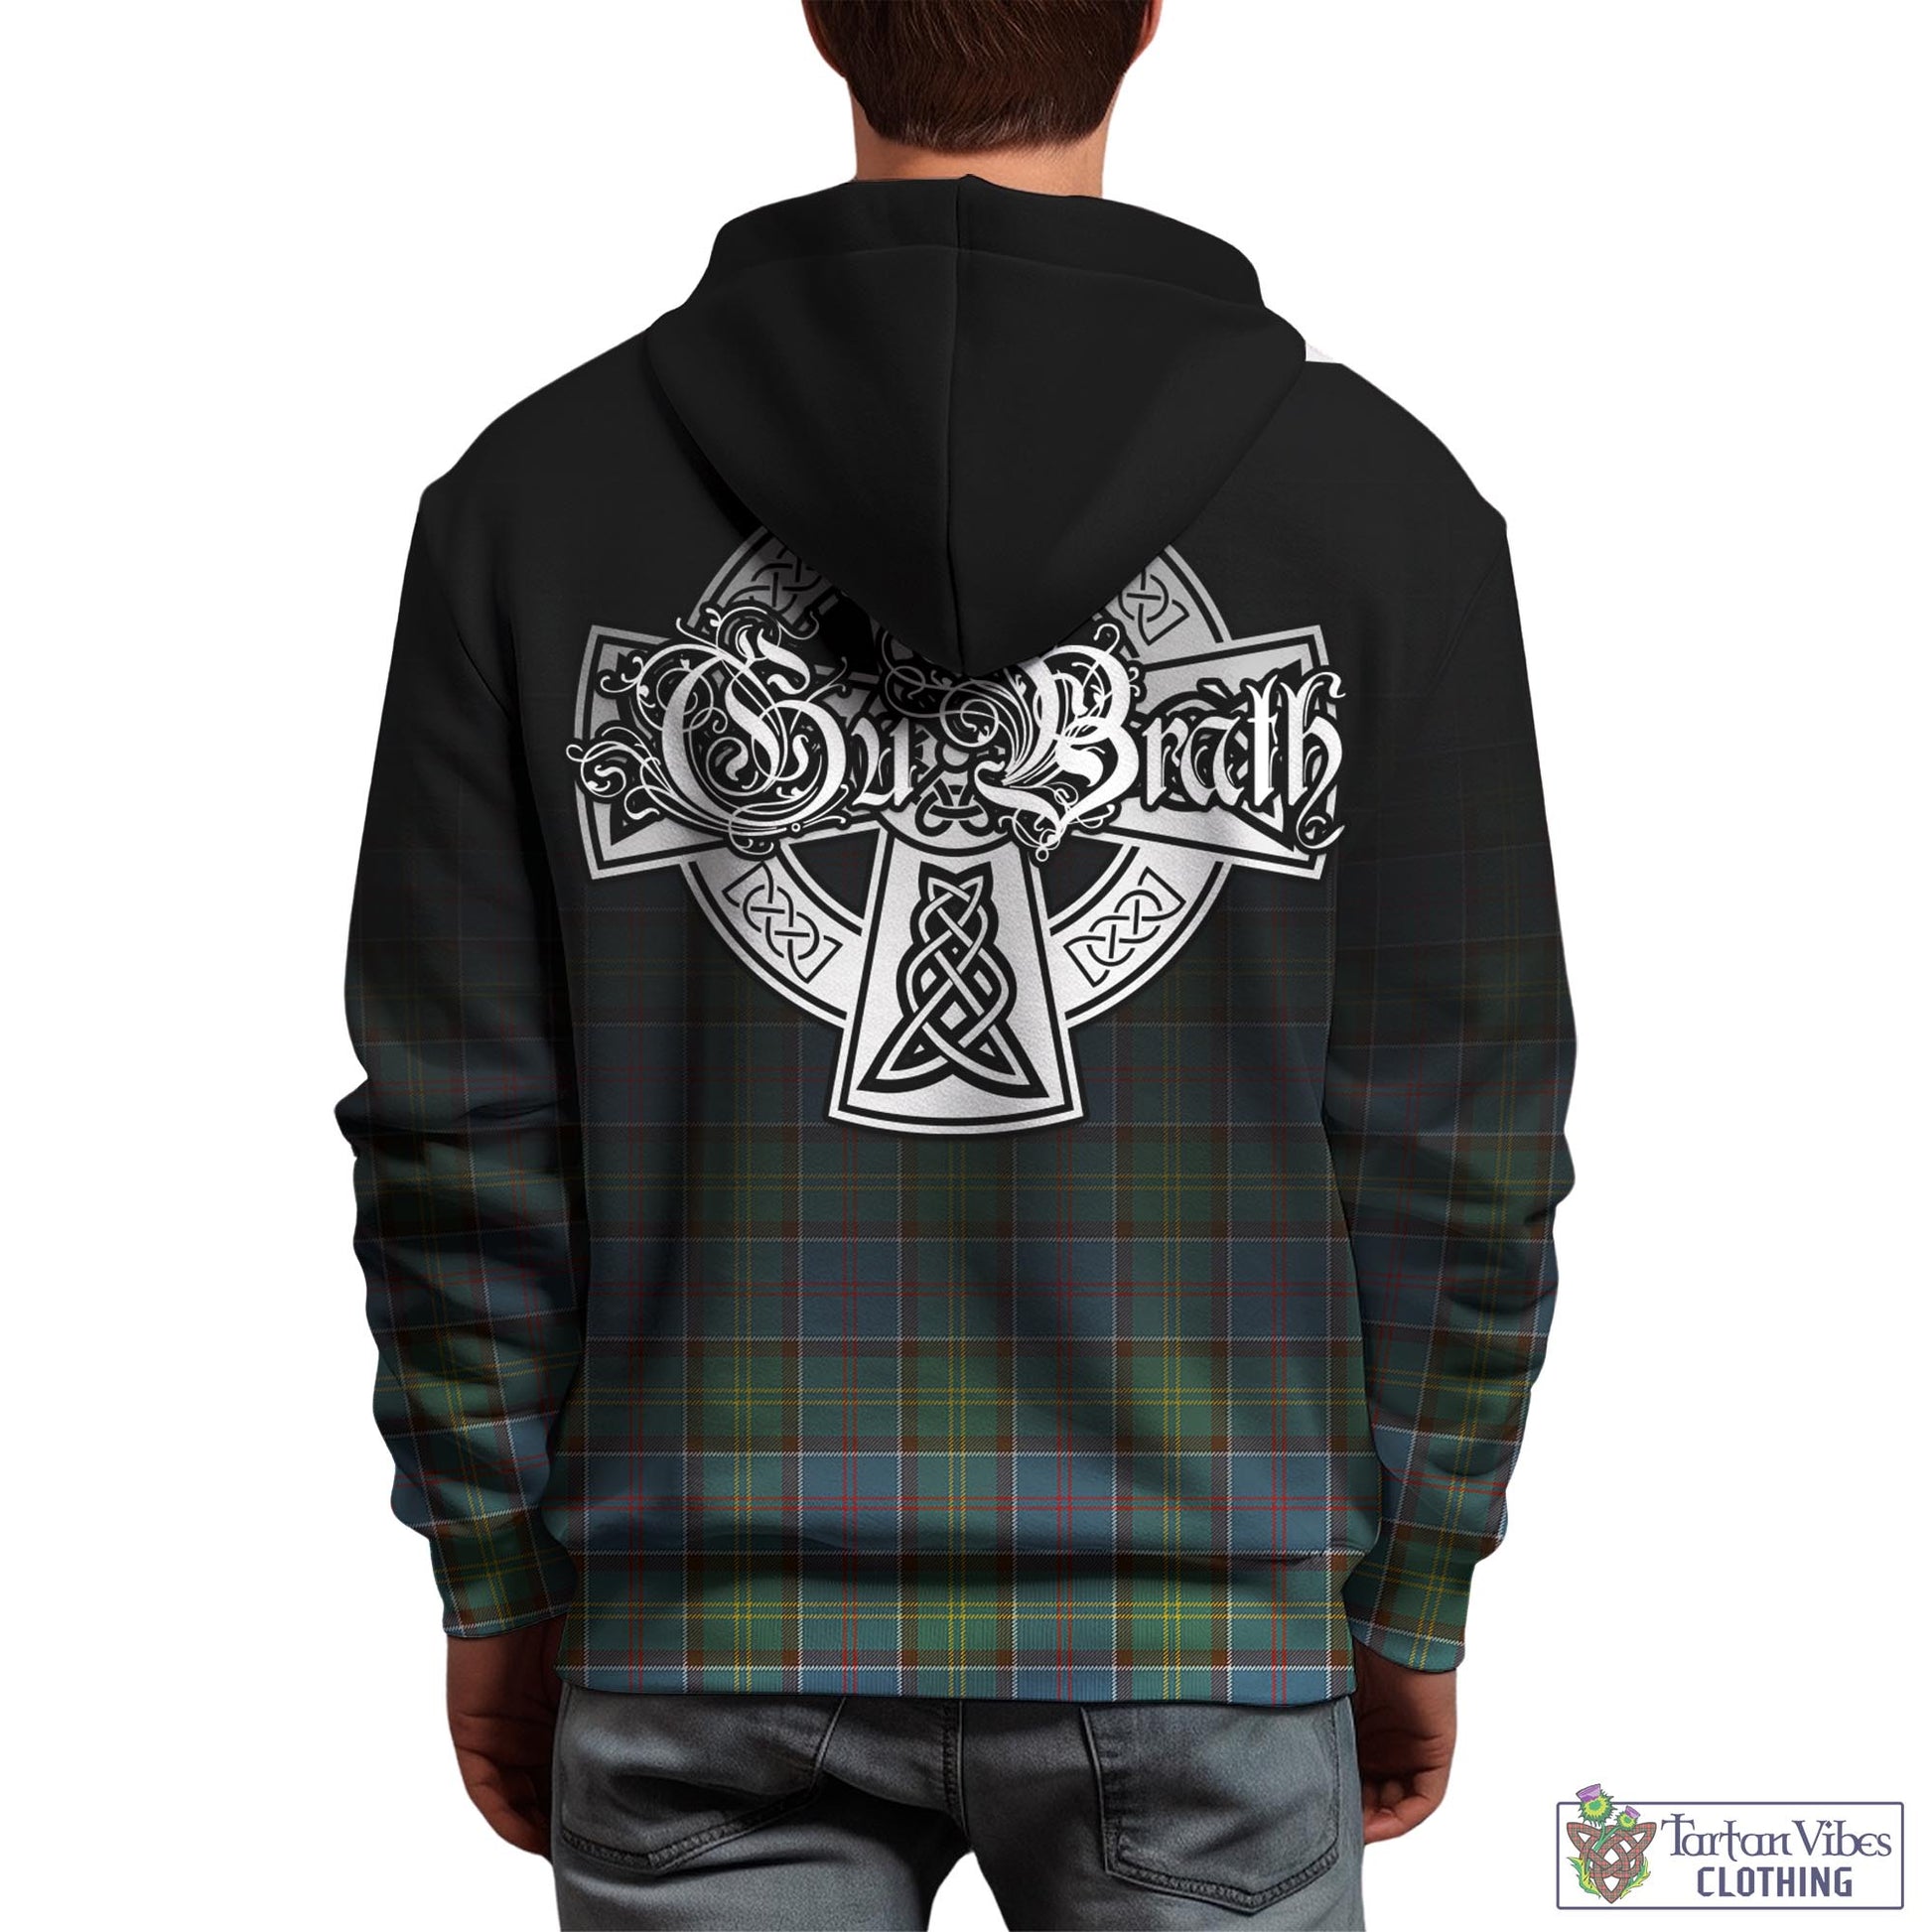 Tartan Vibes Clothing Whitelaw Tartan Hoodie Featuring Alba Gu Brath Family Crest Celtic Inspired